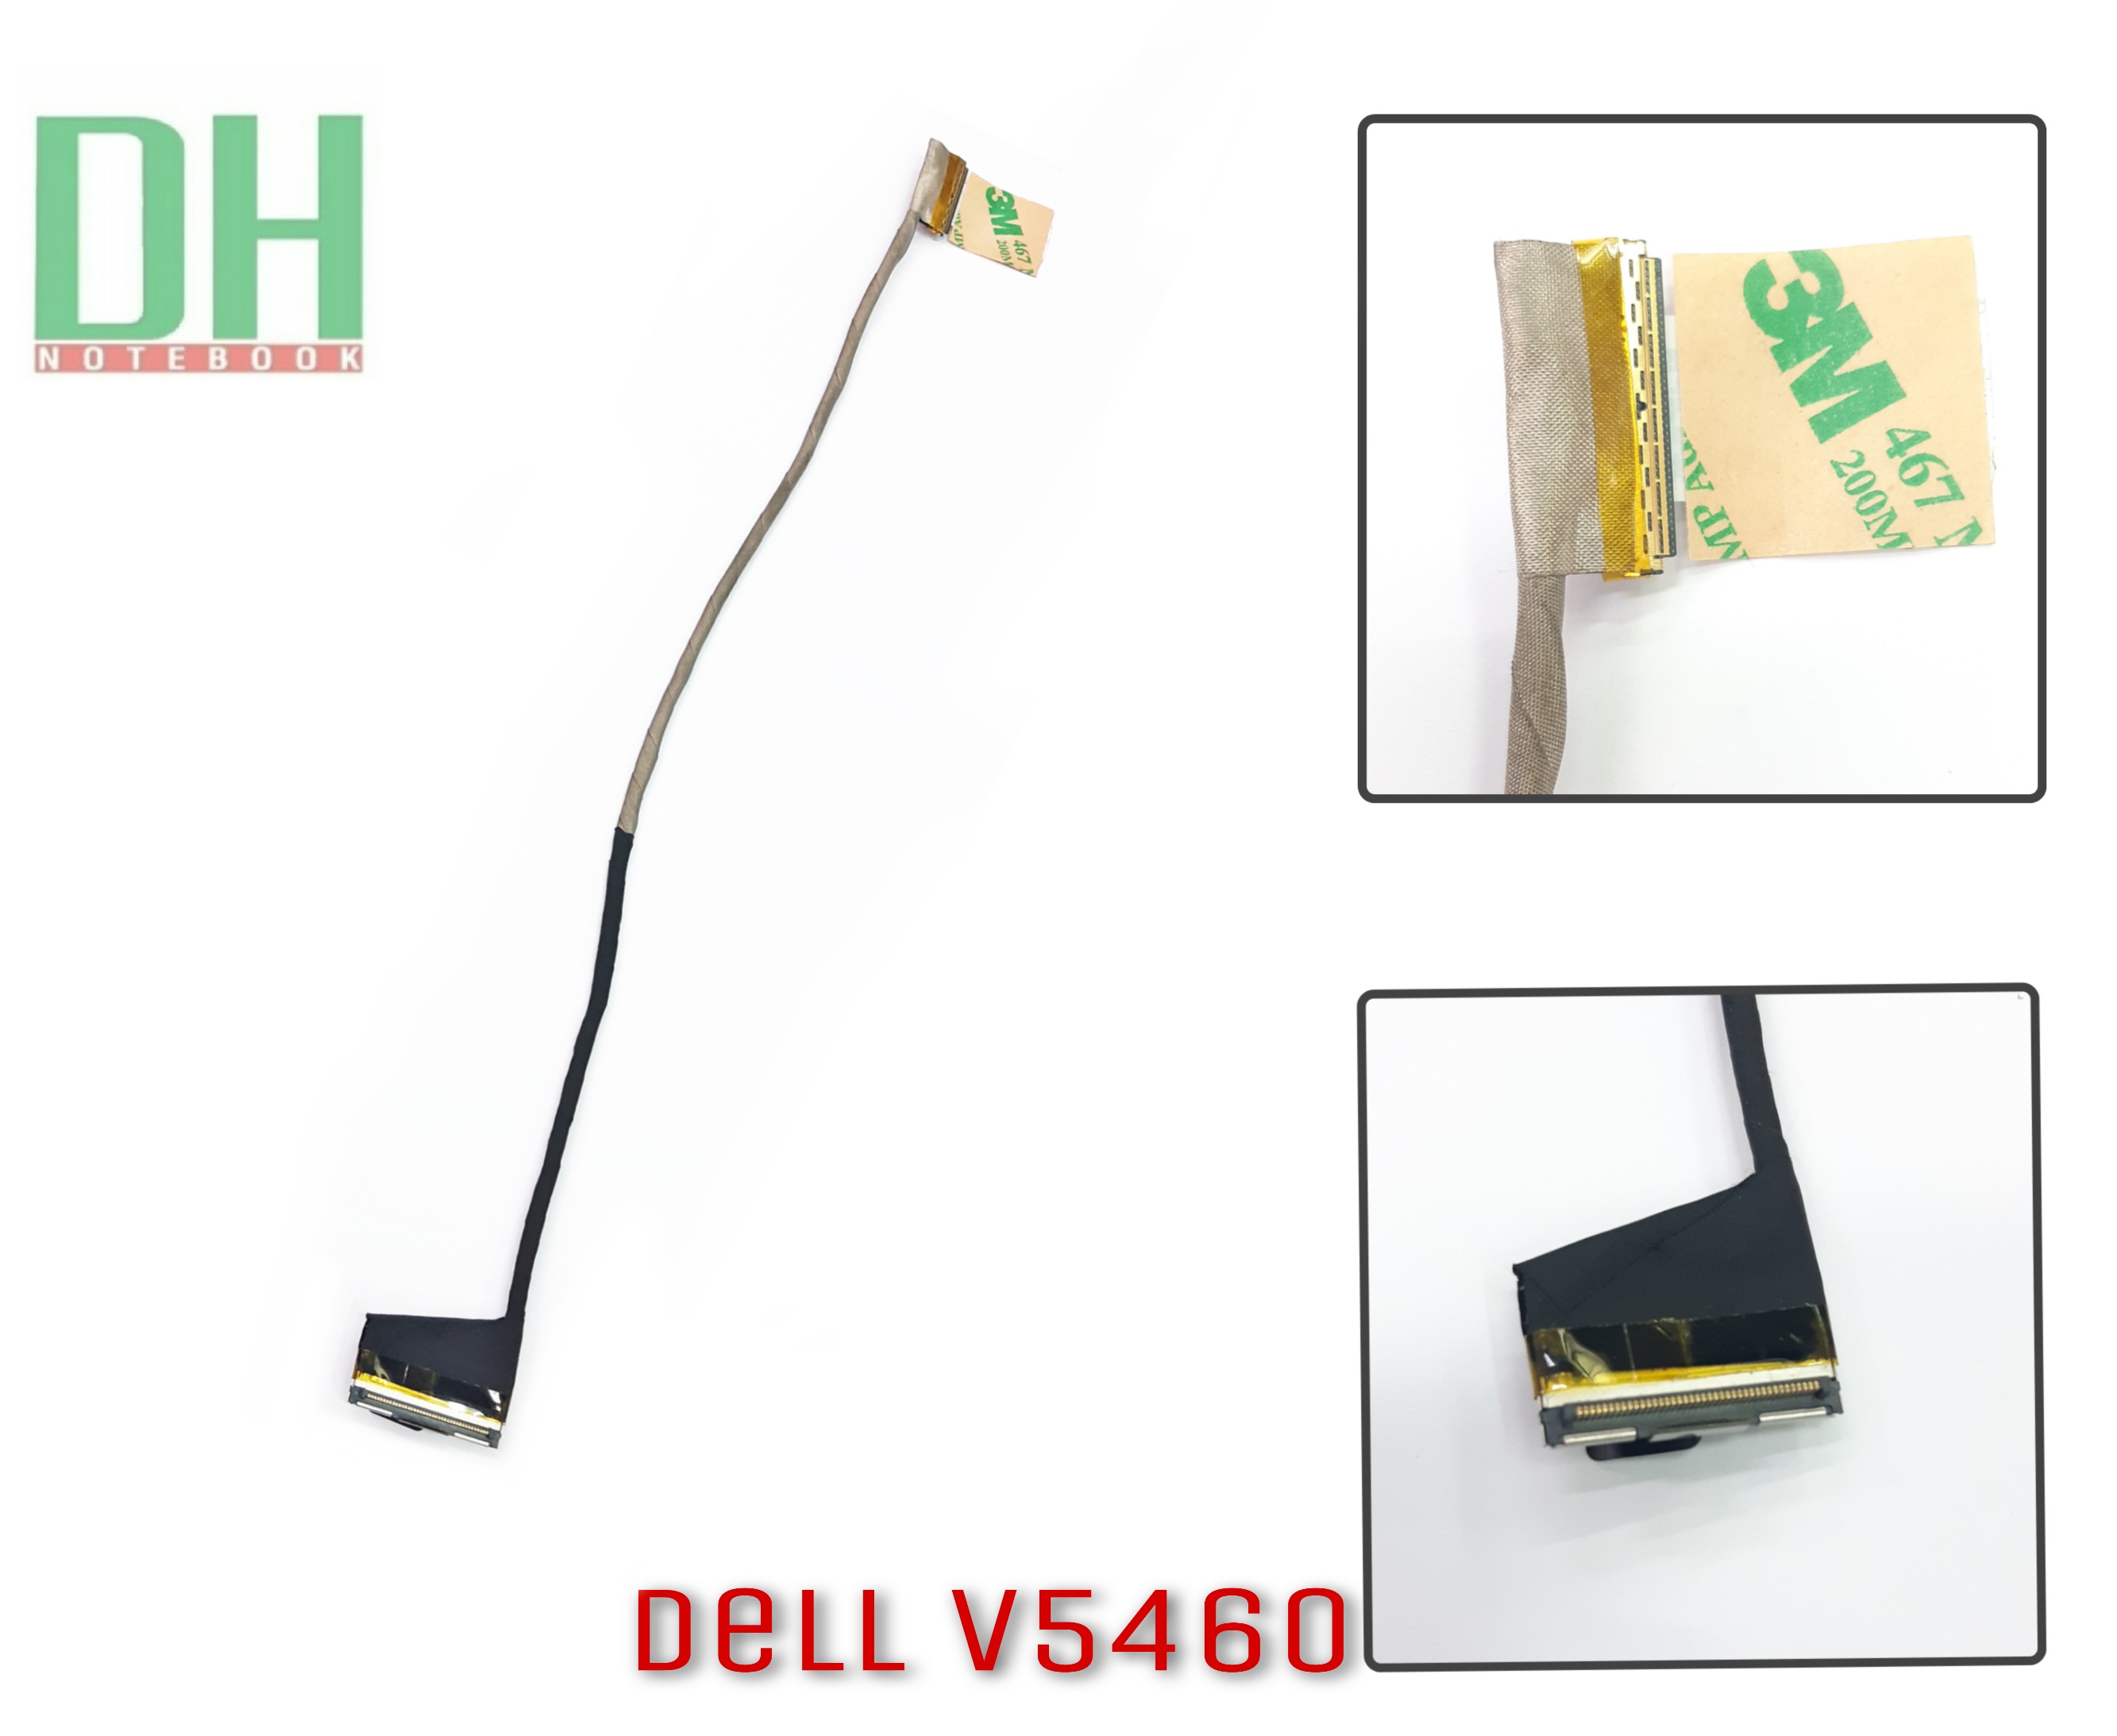 Dell V5460 video Cable